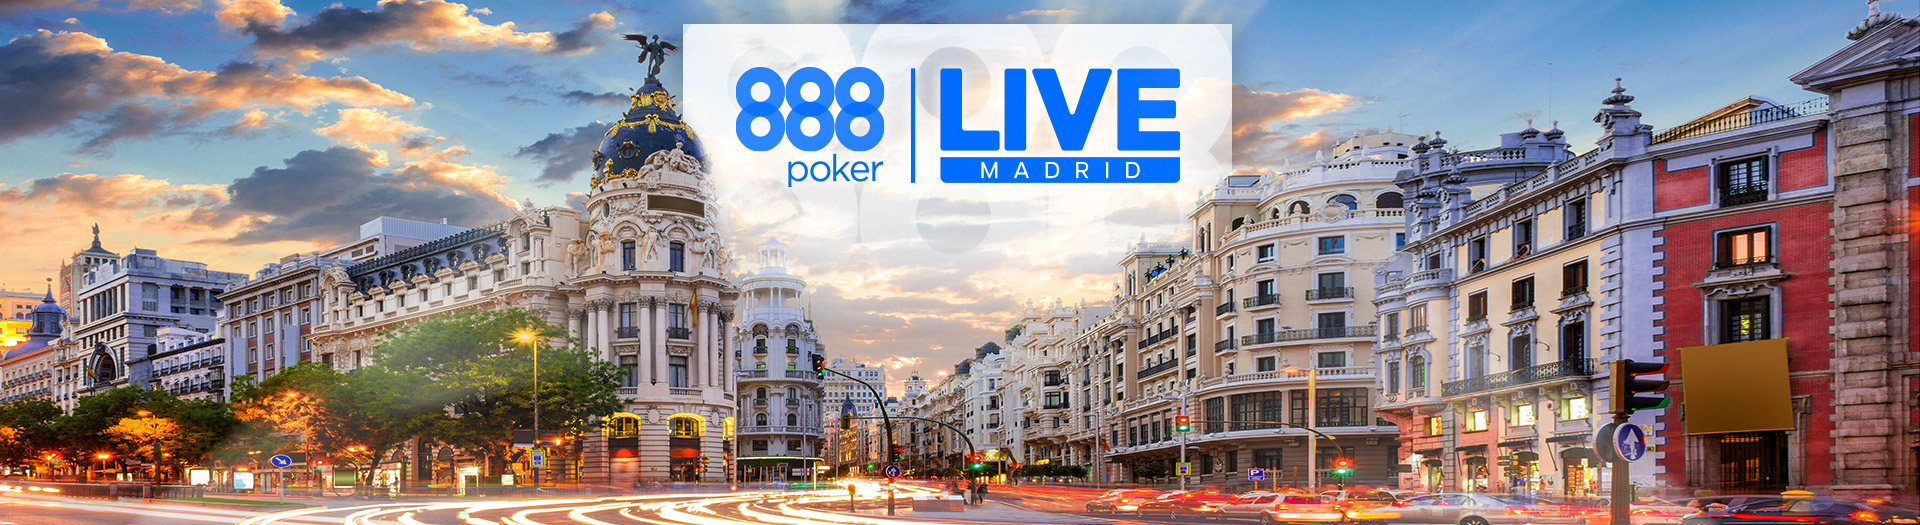 TS-39001-Live-Madrid-main-image_LP-1669196624259_tcm1993-572793